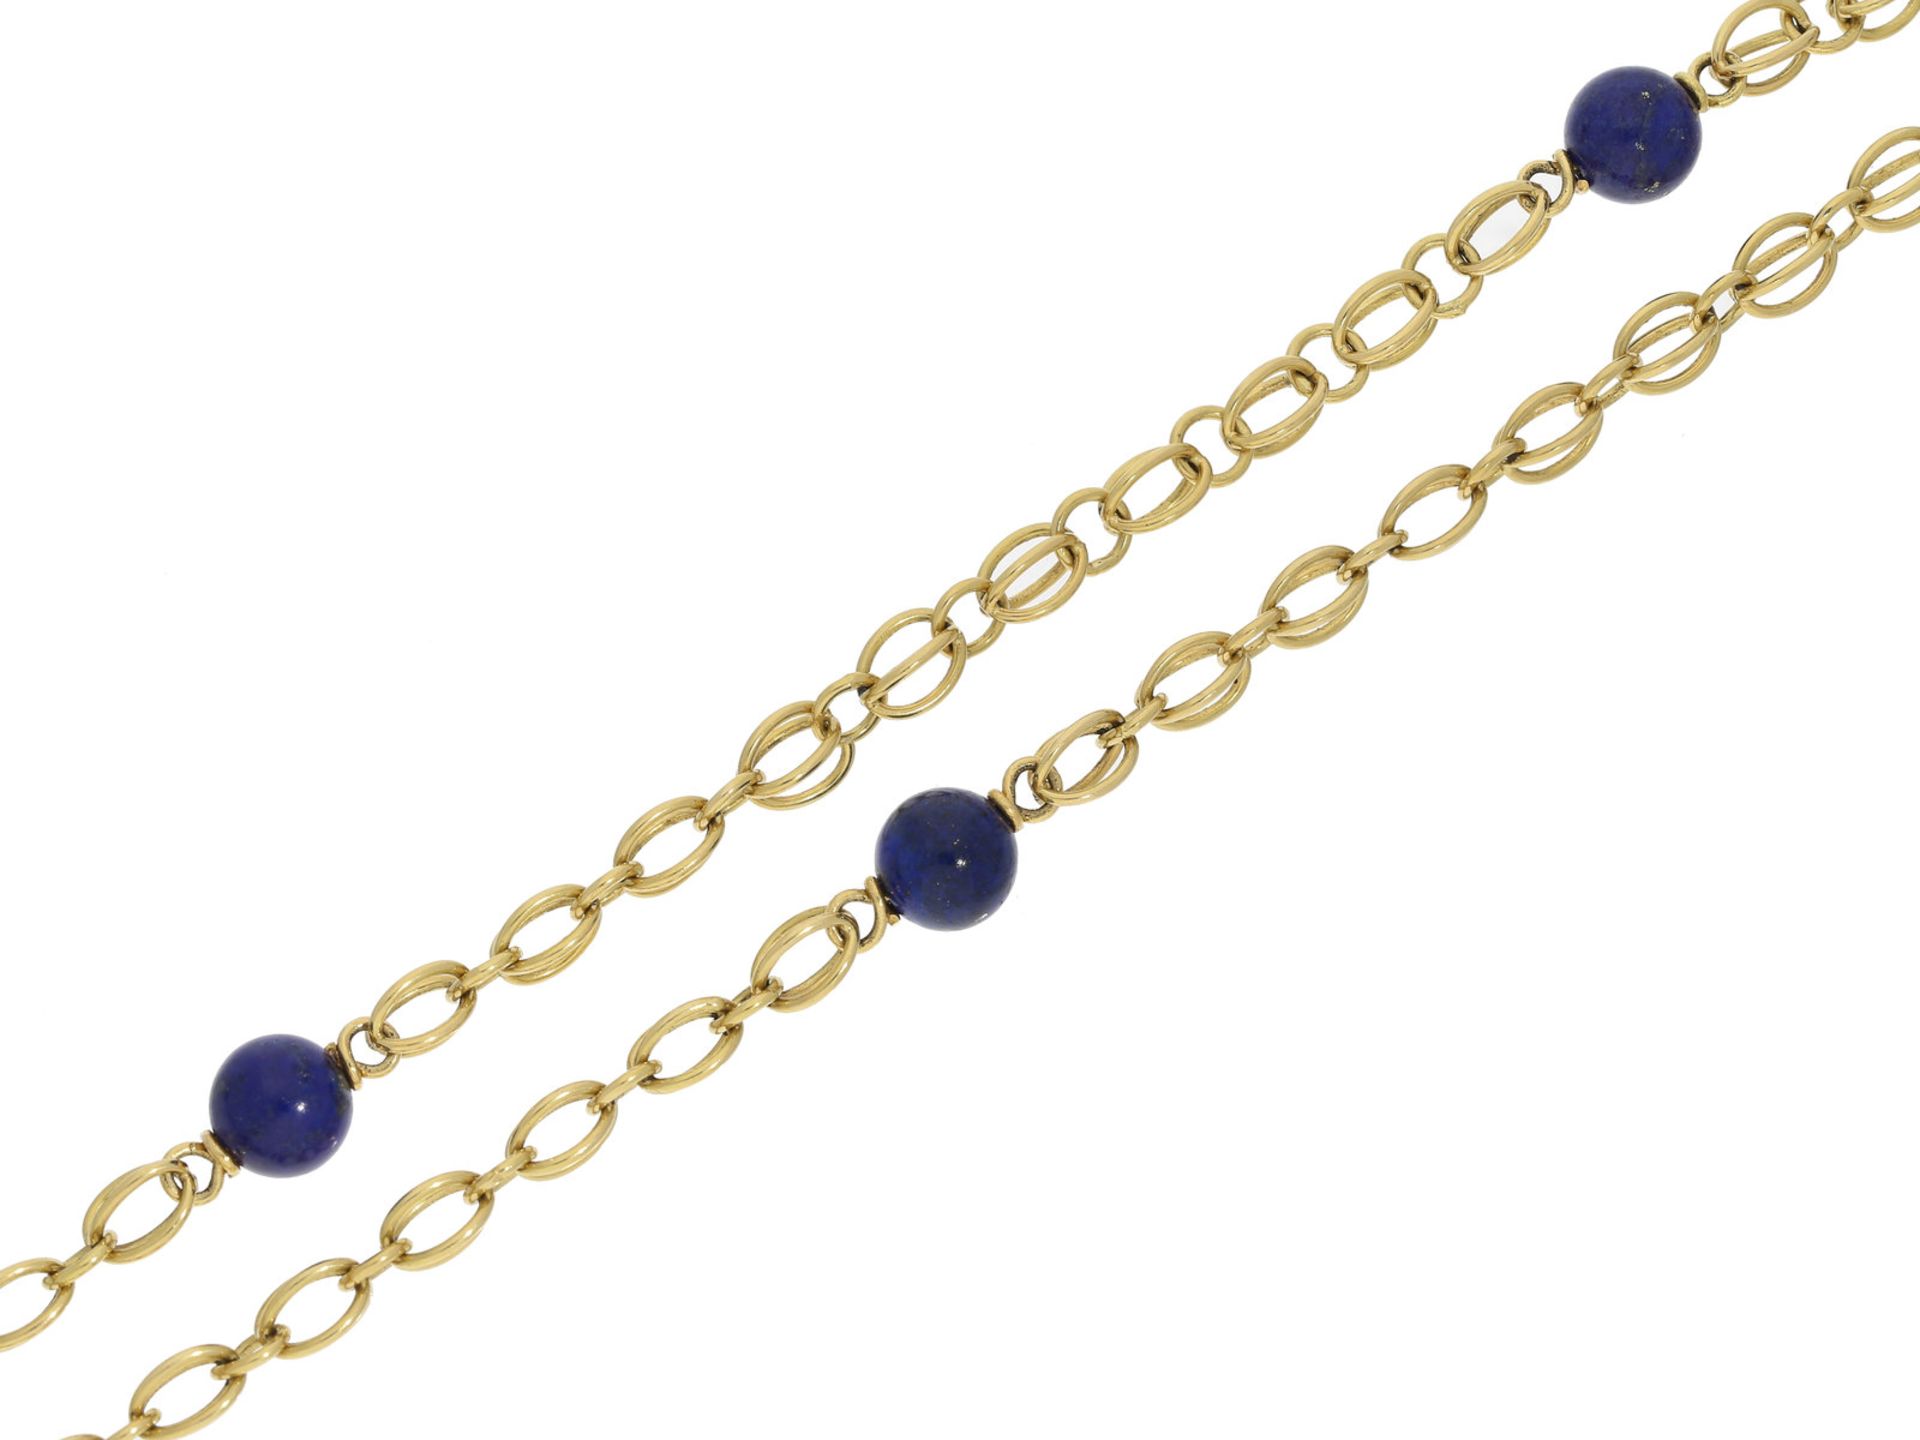 Kette/Collier: dekorative 18K Collierkette mit Lapislazuli-KugelnCa. 77,5cm lang, ca. 38g, 18K Gold,